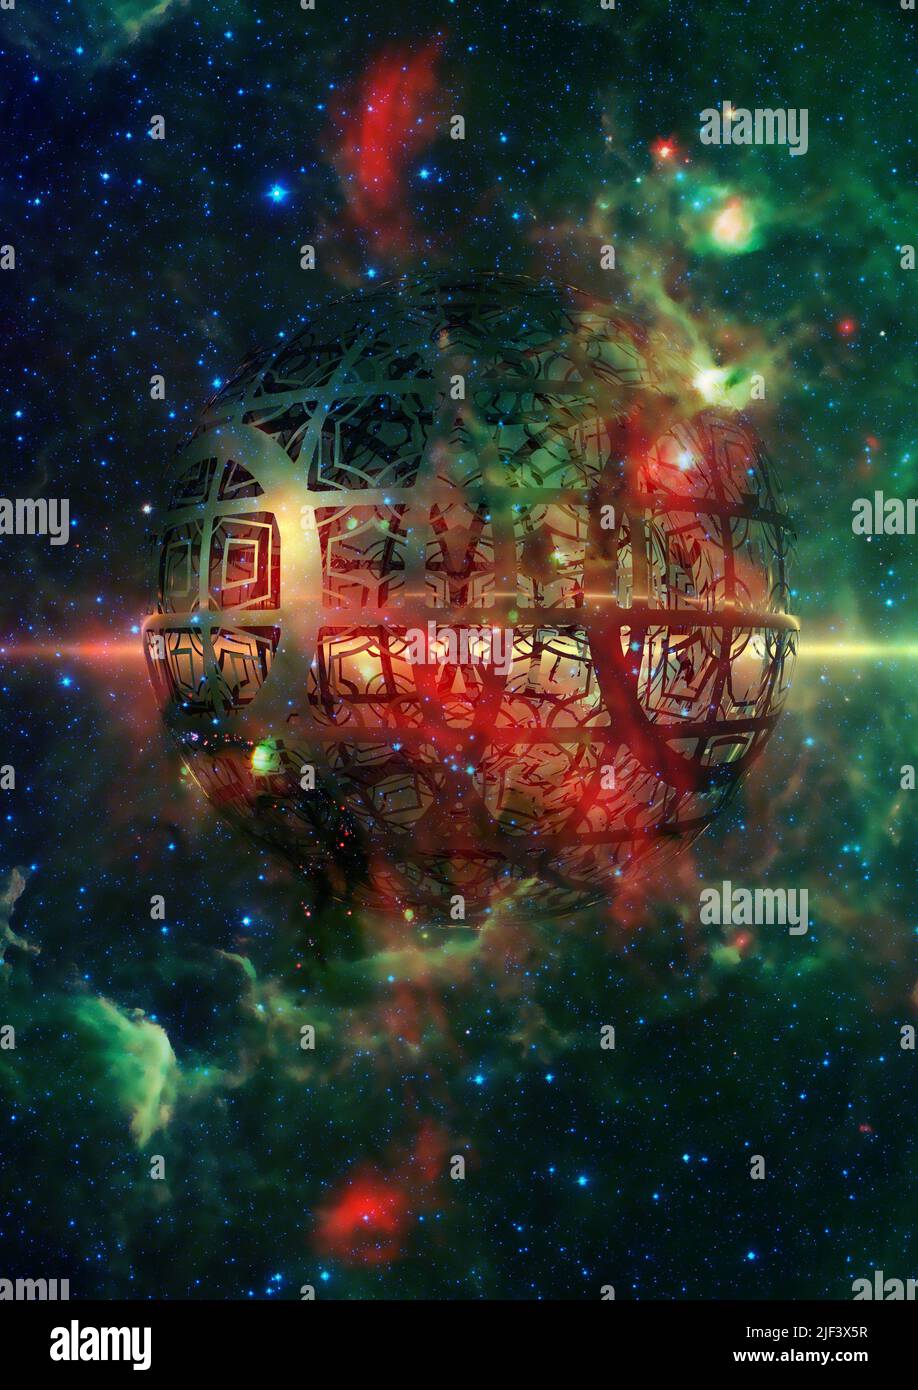 alien sphere in space Stock Photo